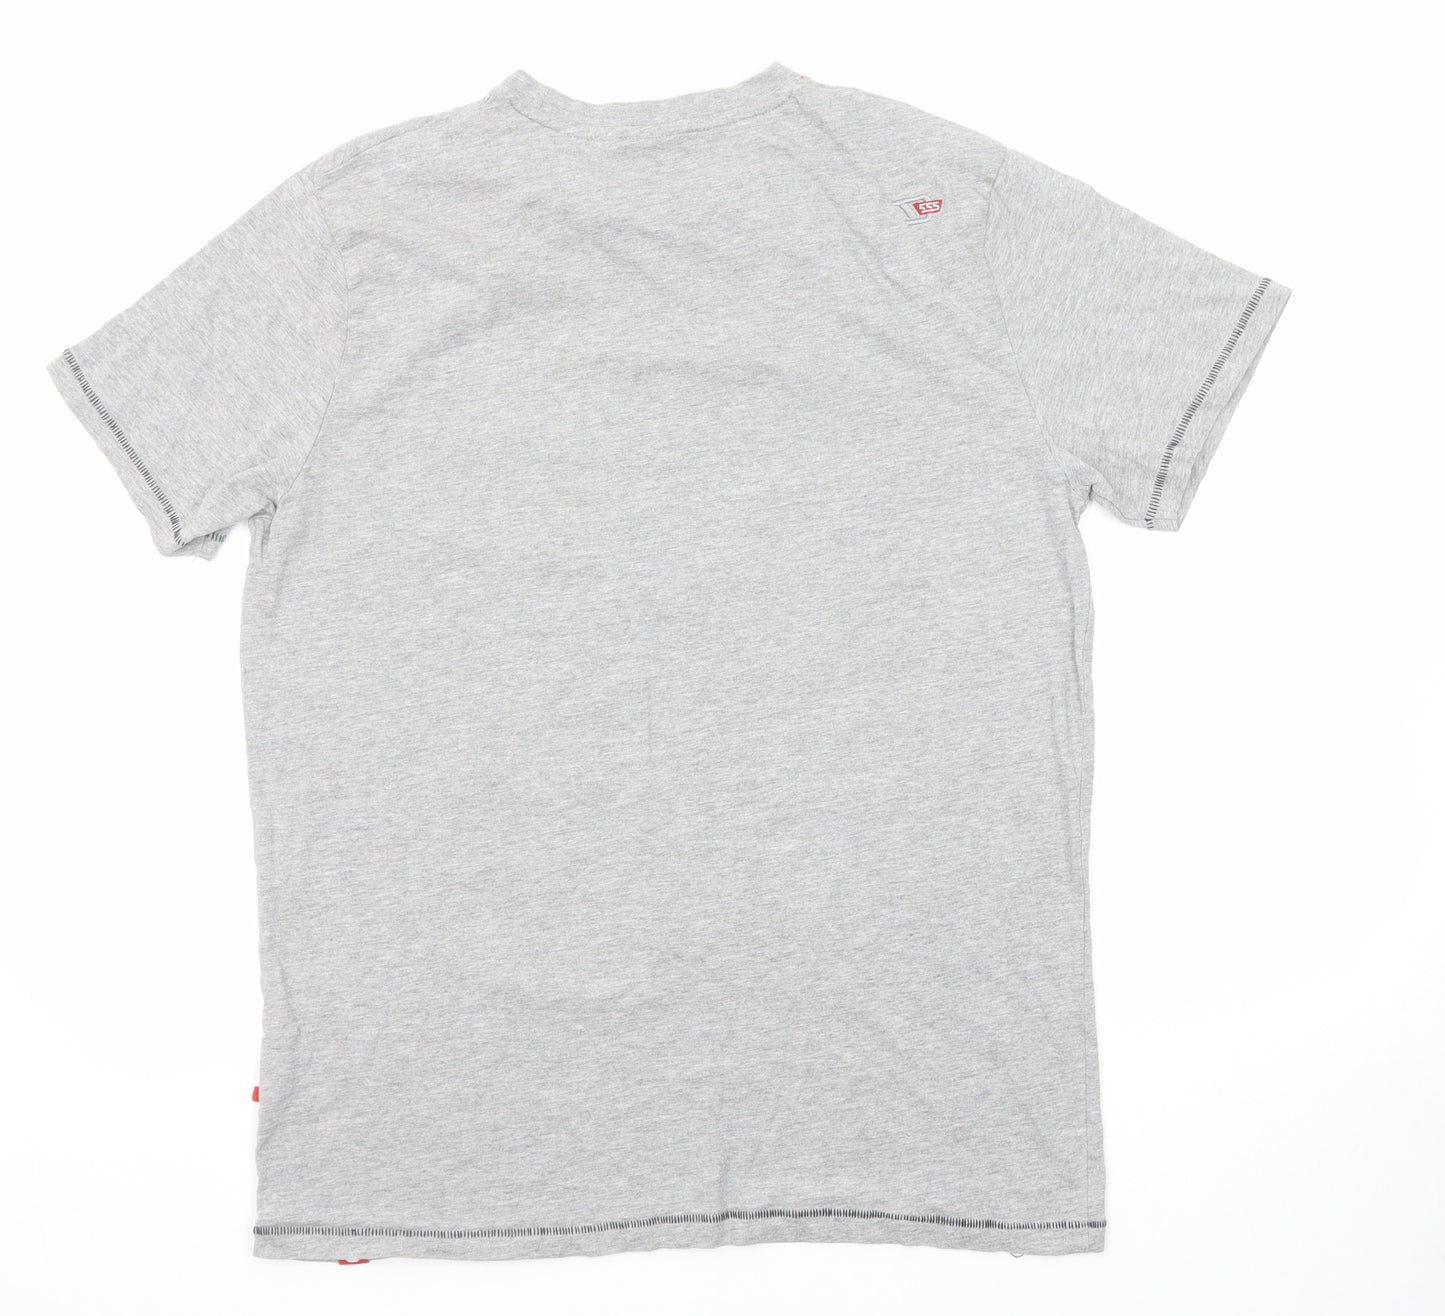 D555 Mens Grey Cotton T-Shirt Size L Round Neck - New York